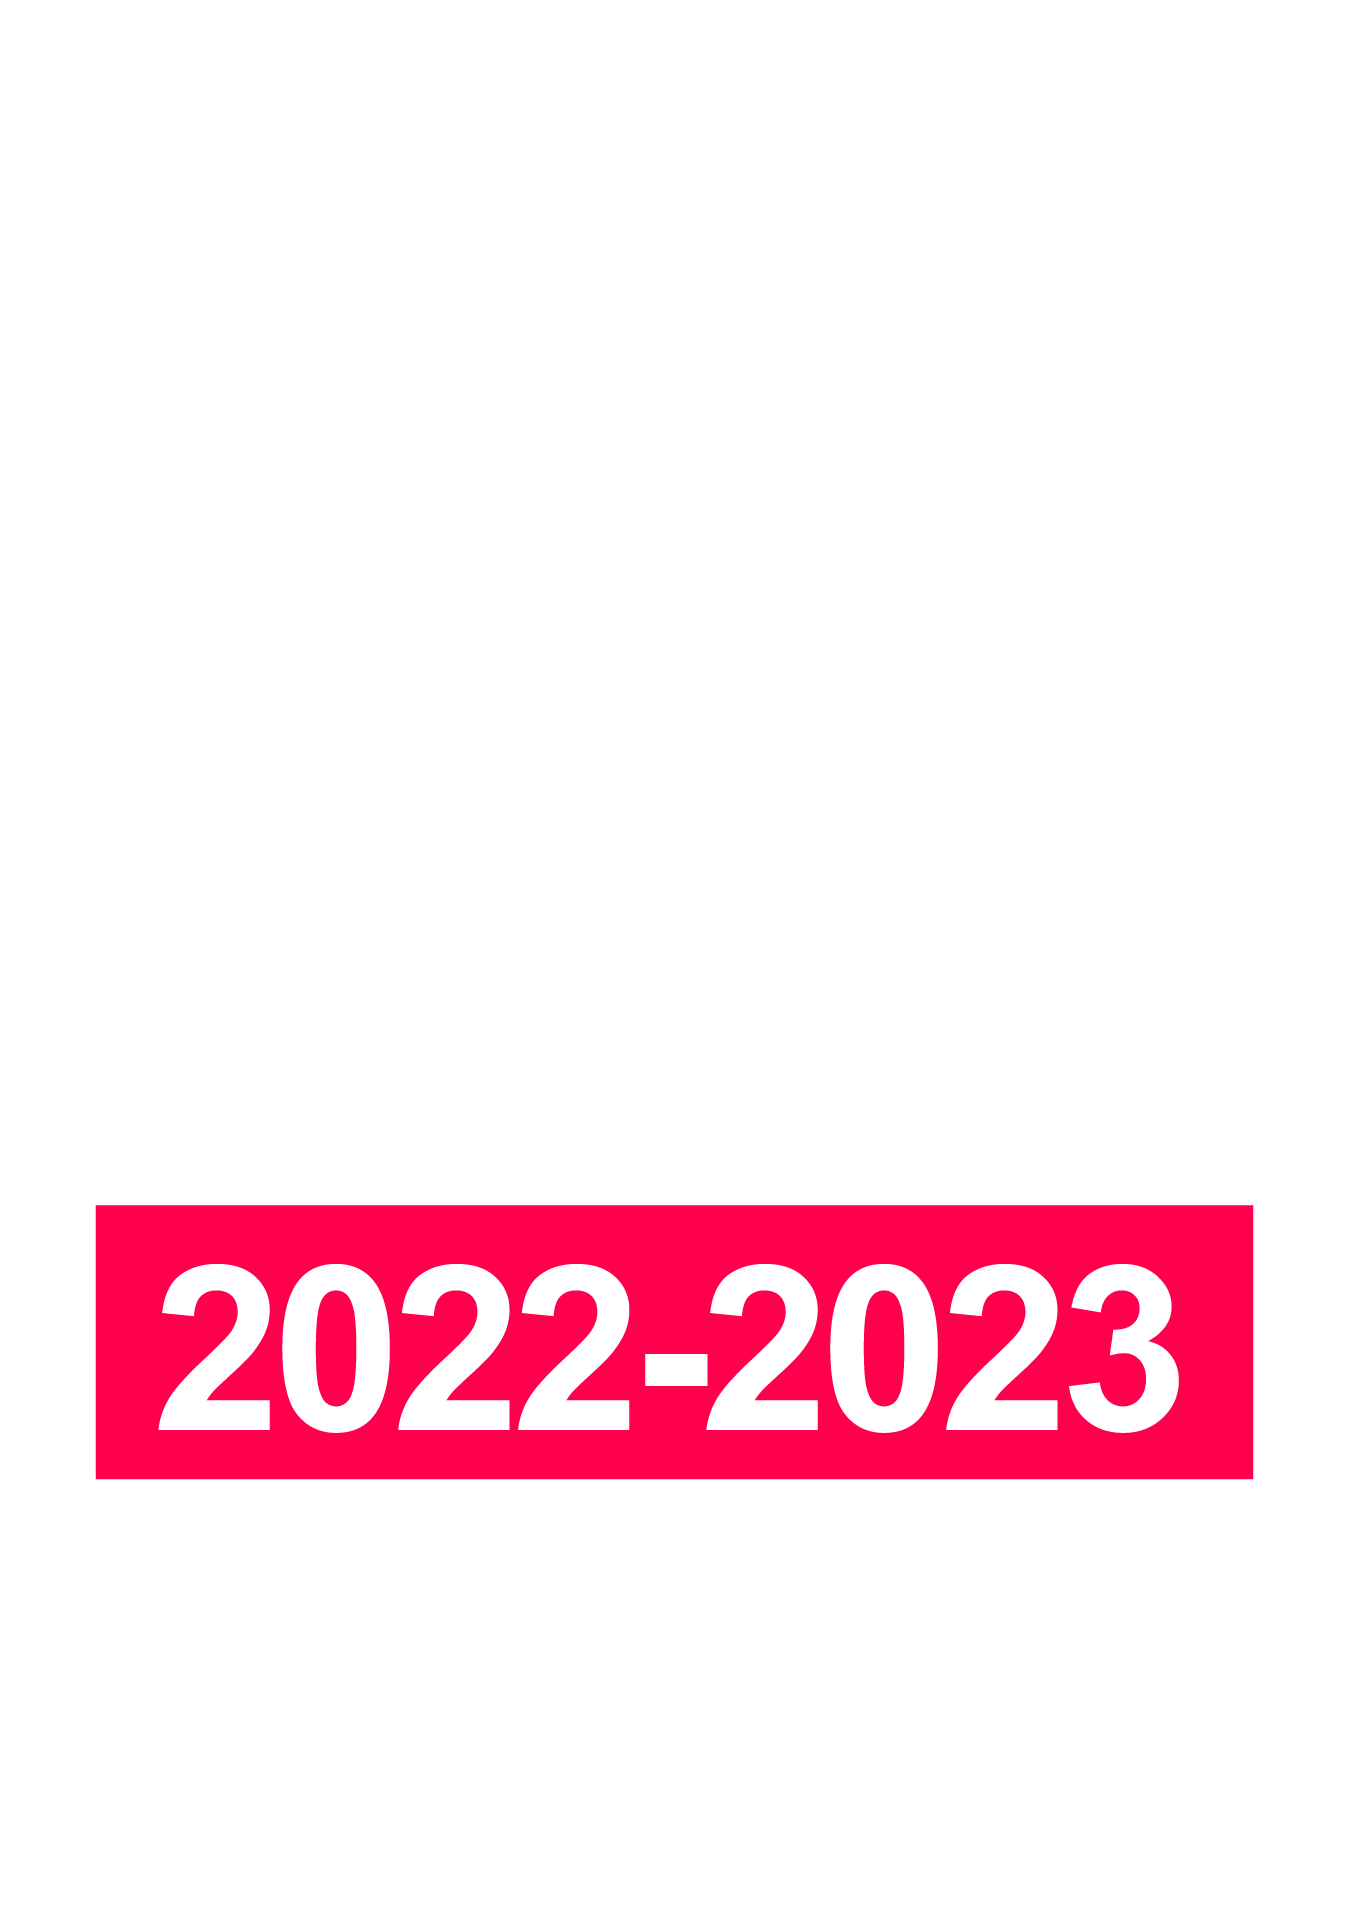 Estudio-de-compensacion-2022-logo-blanco